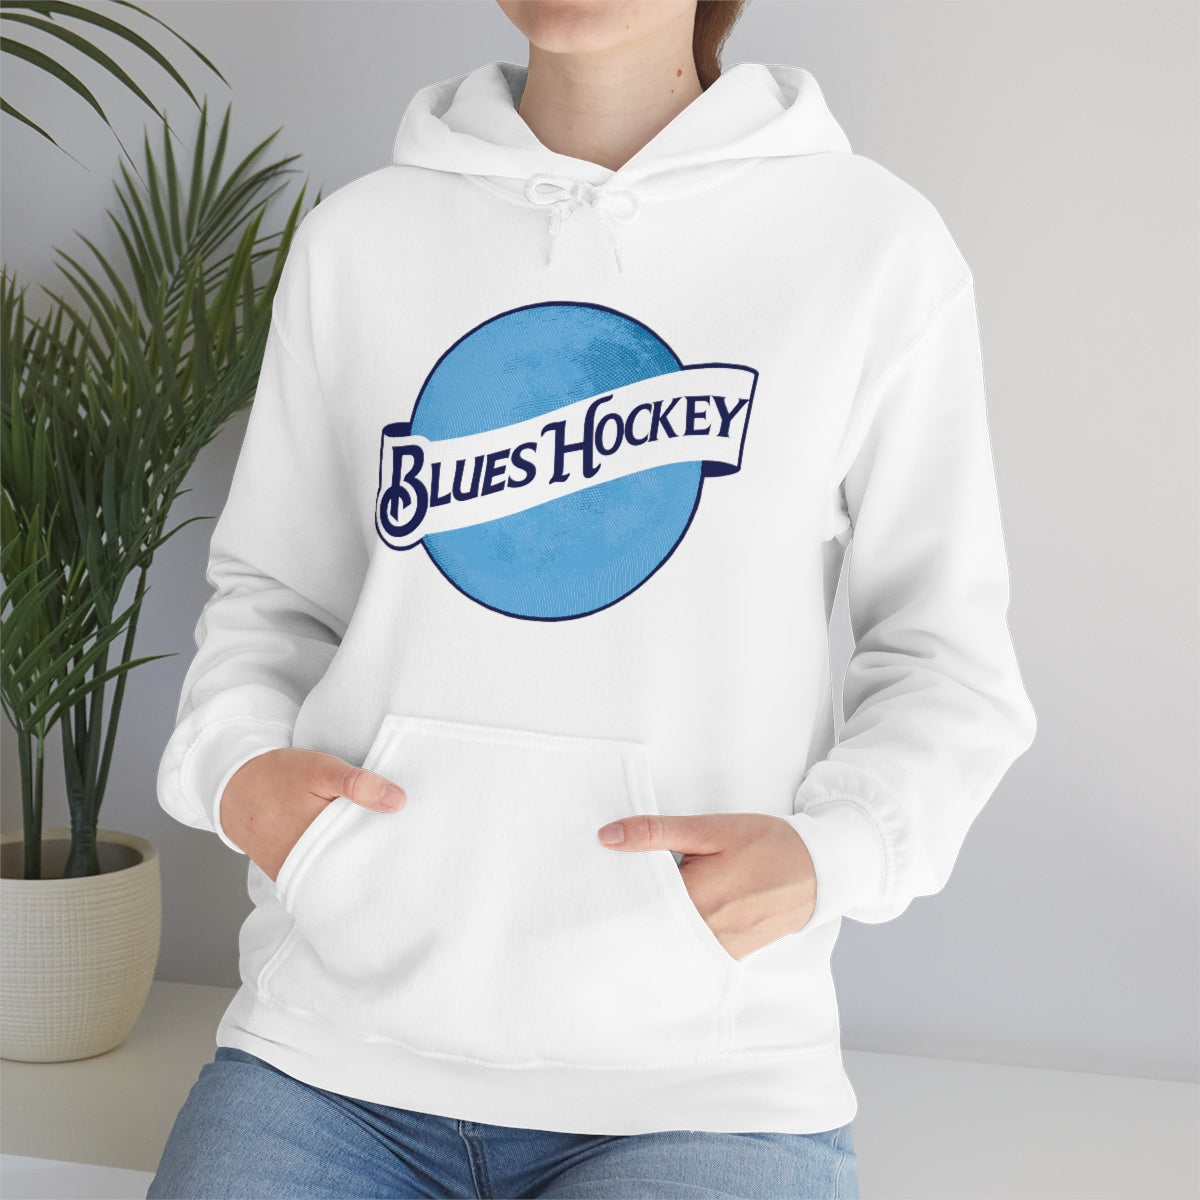 Adidas St Louis Blues Mens Grey Hockey Grind Hood